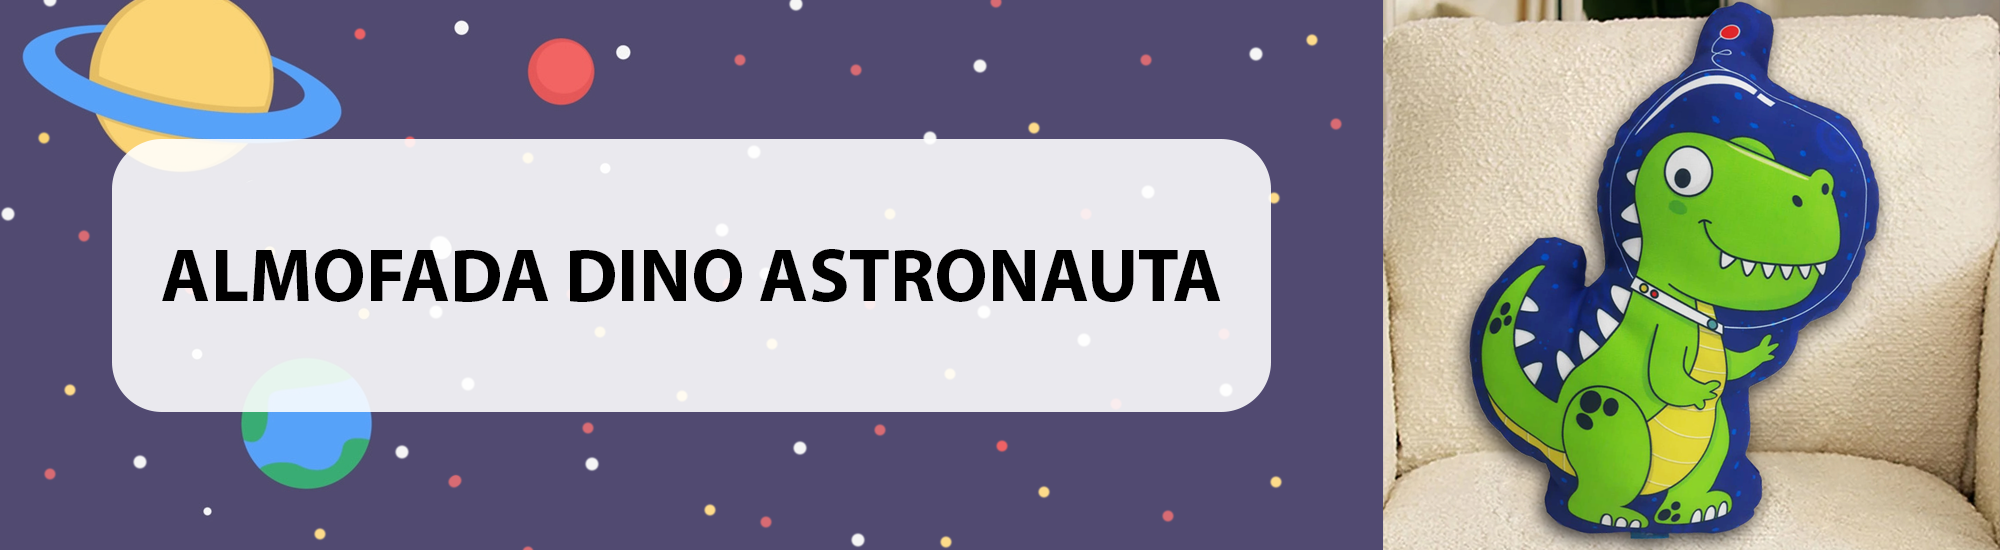 100593 - Almofada Dino Astronauta